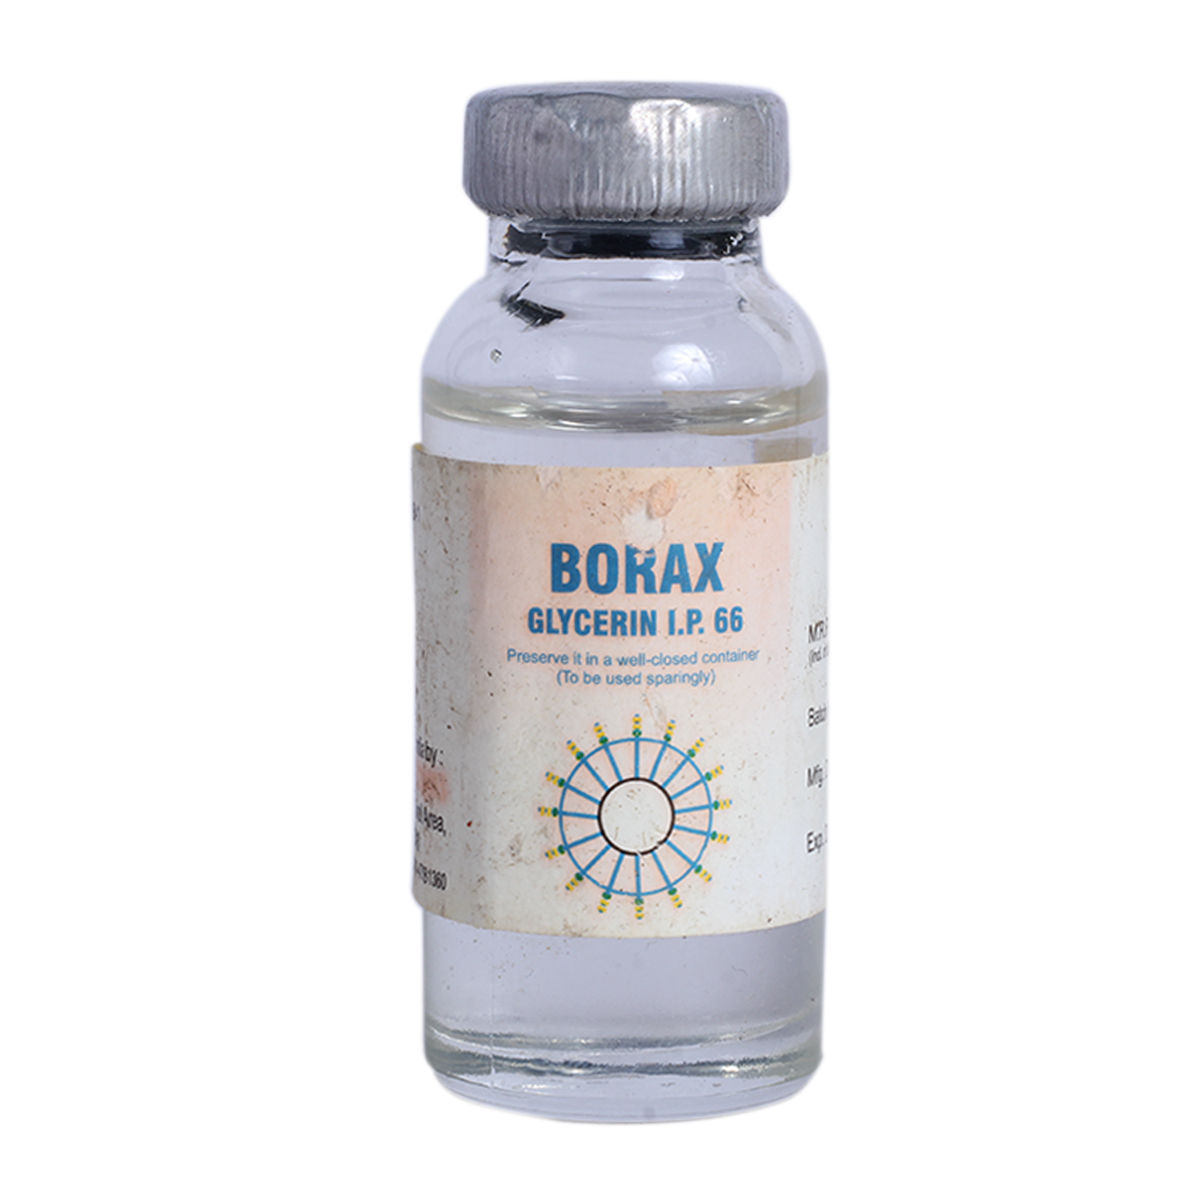 Buy Borax Glycerin, 50 gm Online